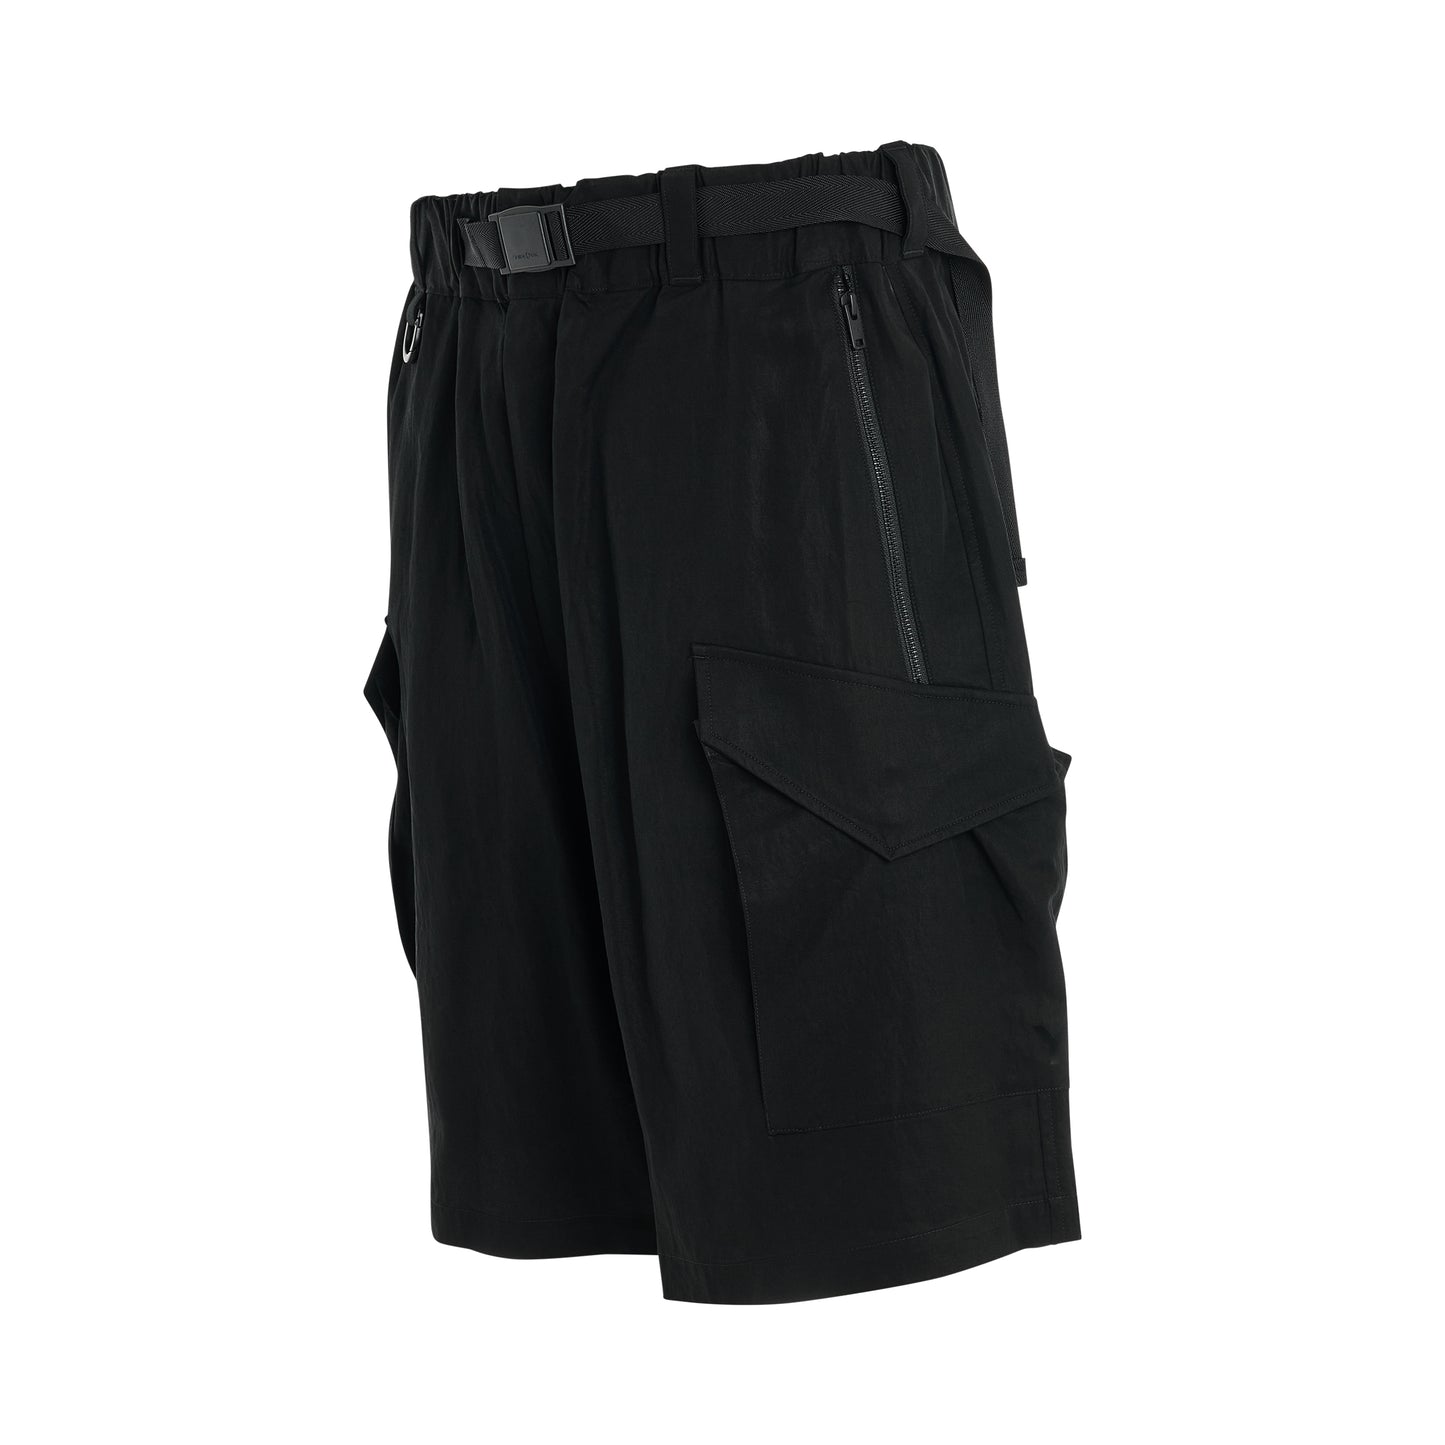 Wash Twill Shorts in Black